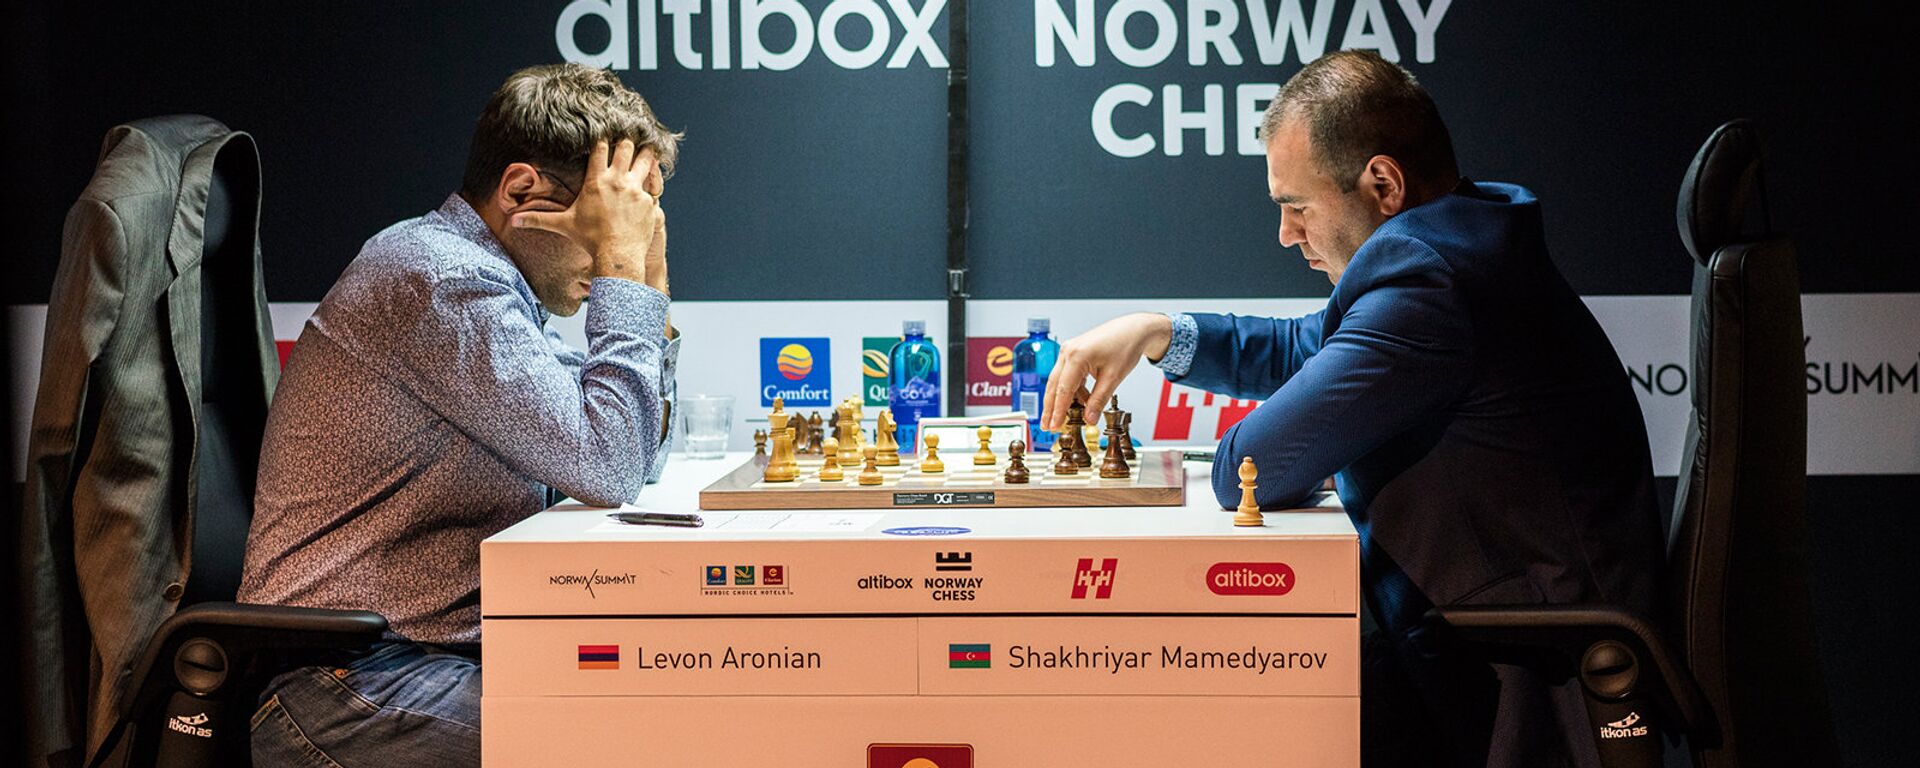 Партия Левон Аронян Шахрияр Мамедъяров в турнире Altibox Norway Chess 2018 (1 июня 2018). Ставангер, Норвегия - Sputnik Արմենիա, 1920, 11.09.2021